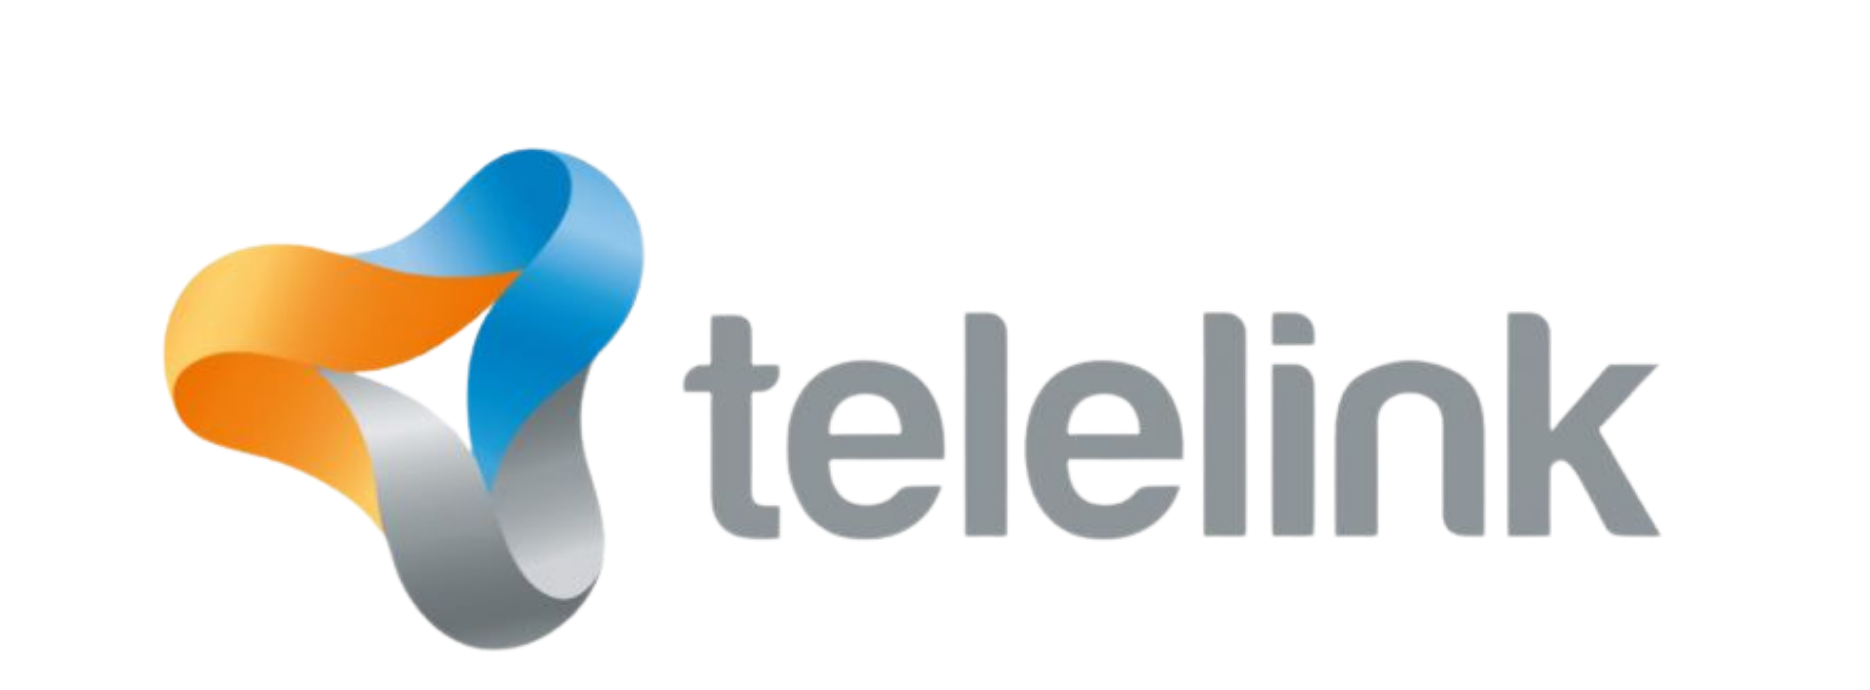 telelink bulgaria partner network